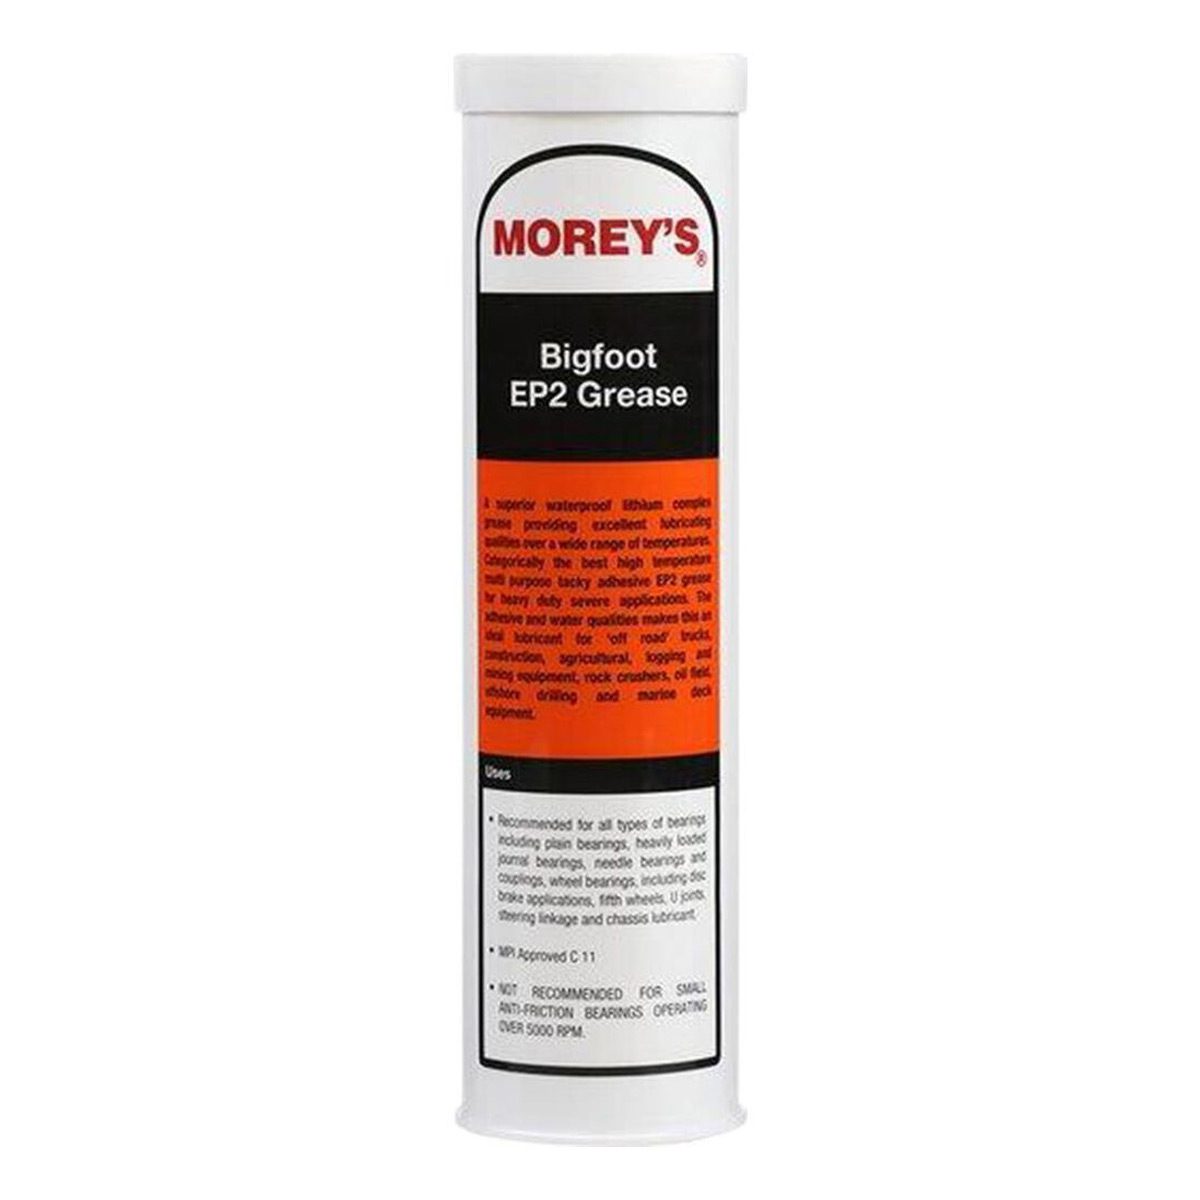 oil-lubricants-grease-moreys-big-foot-ep2-grease-450gm-gram-high-temperature-multi-purpose-tacky-adhesive-ep-grease-heavy-duty-severe-service-applications-vjs-distributors-M002